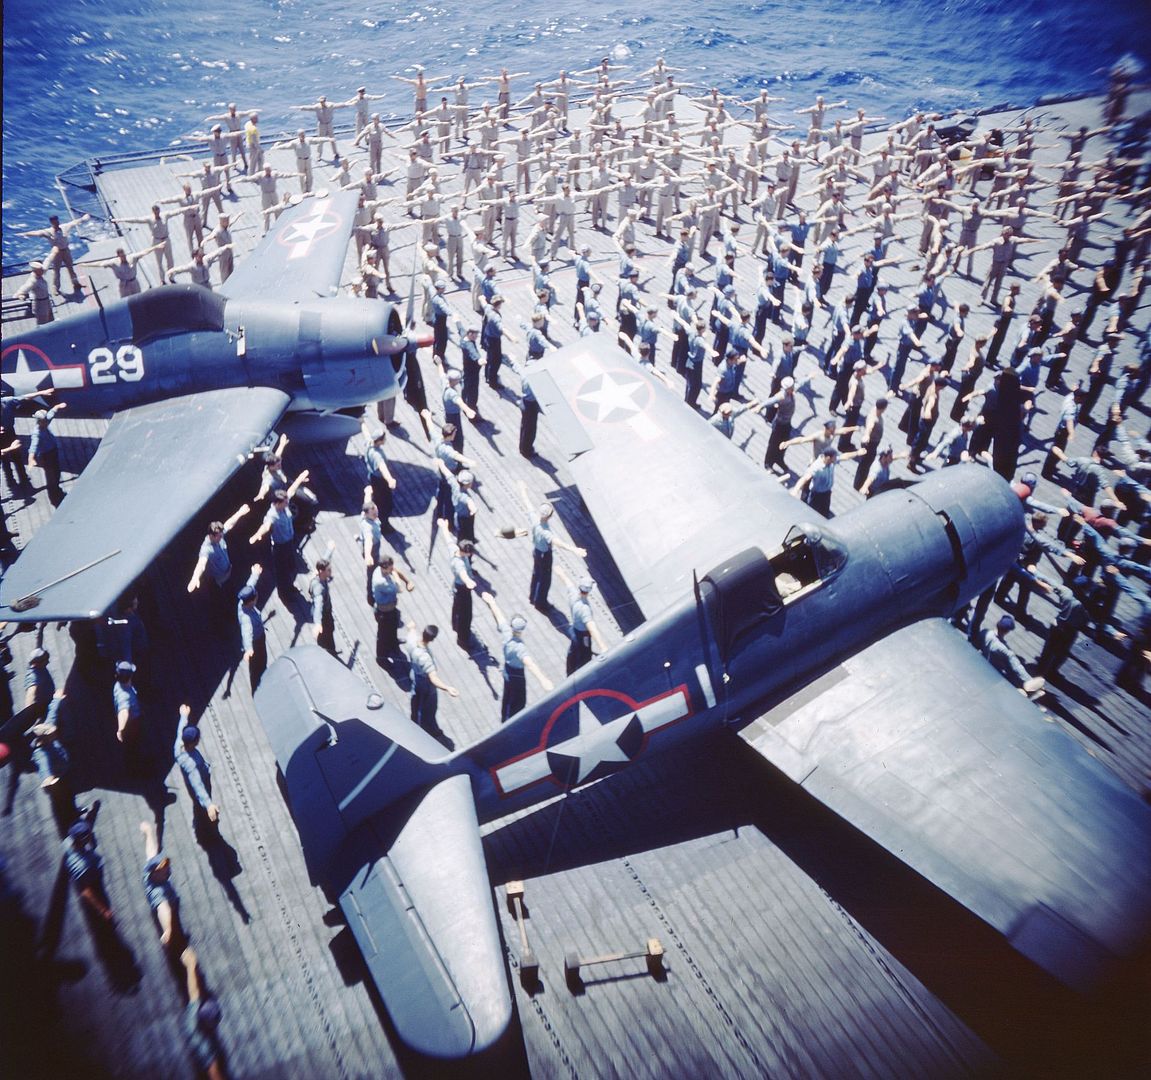 Daily Calisthenics On Flight Deck Of The USS Yorktown